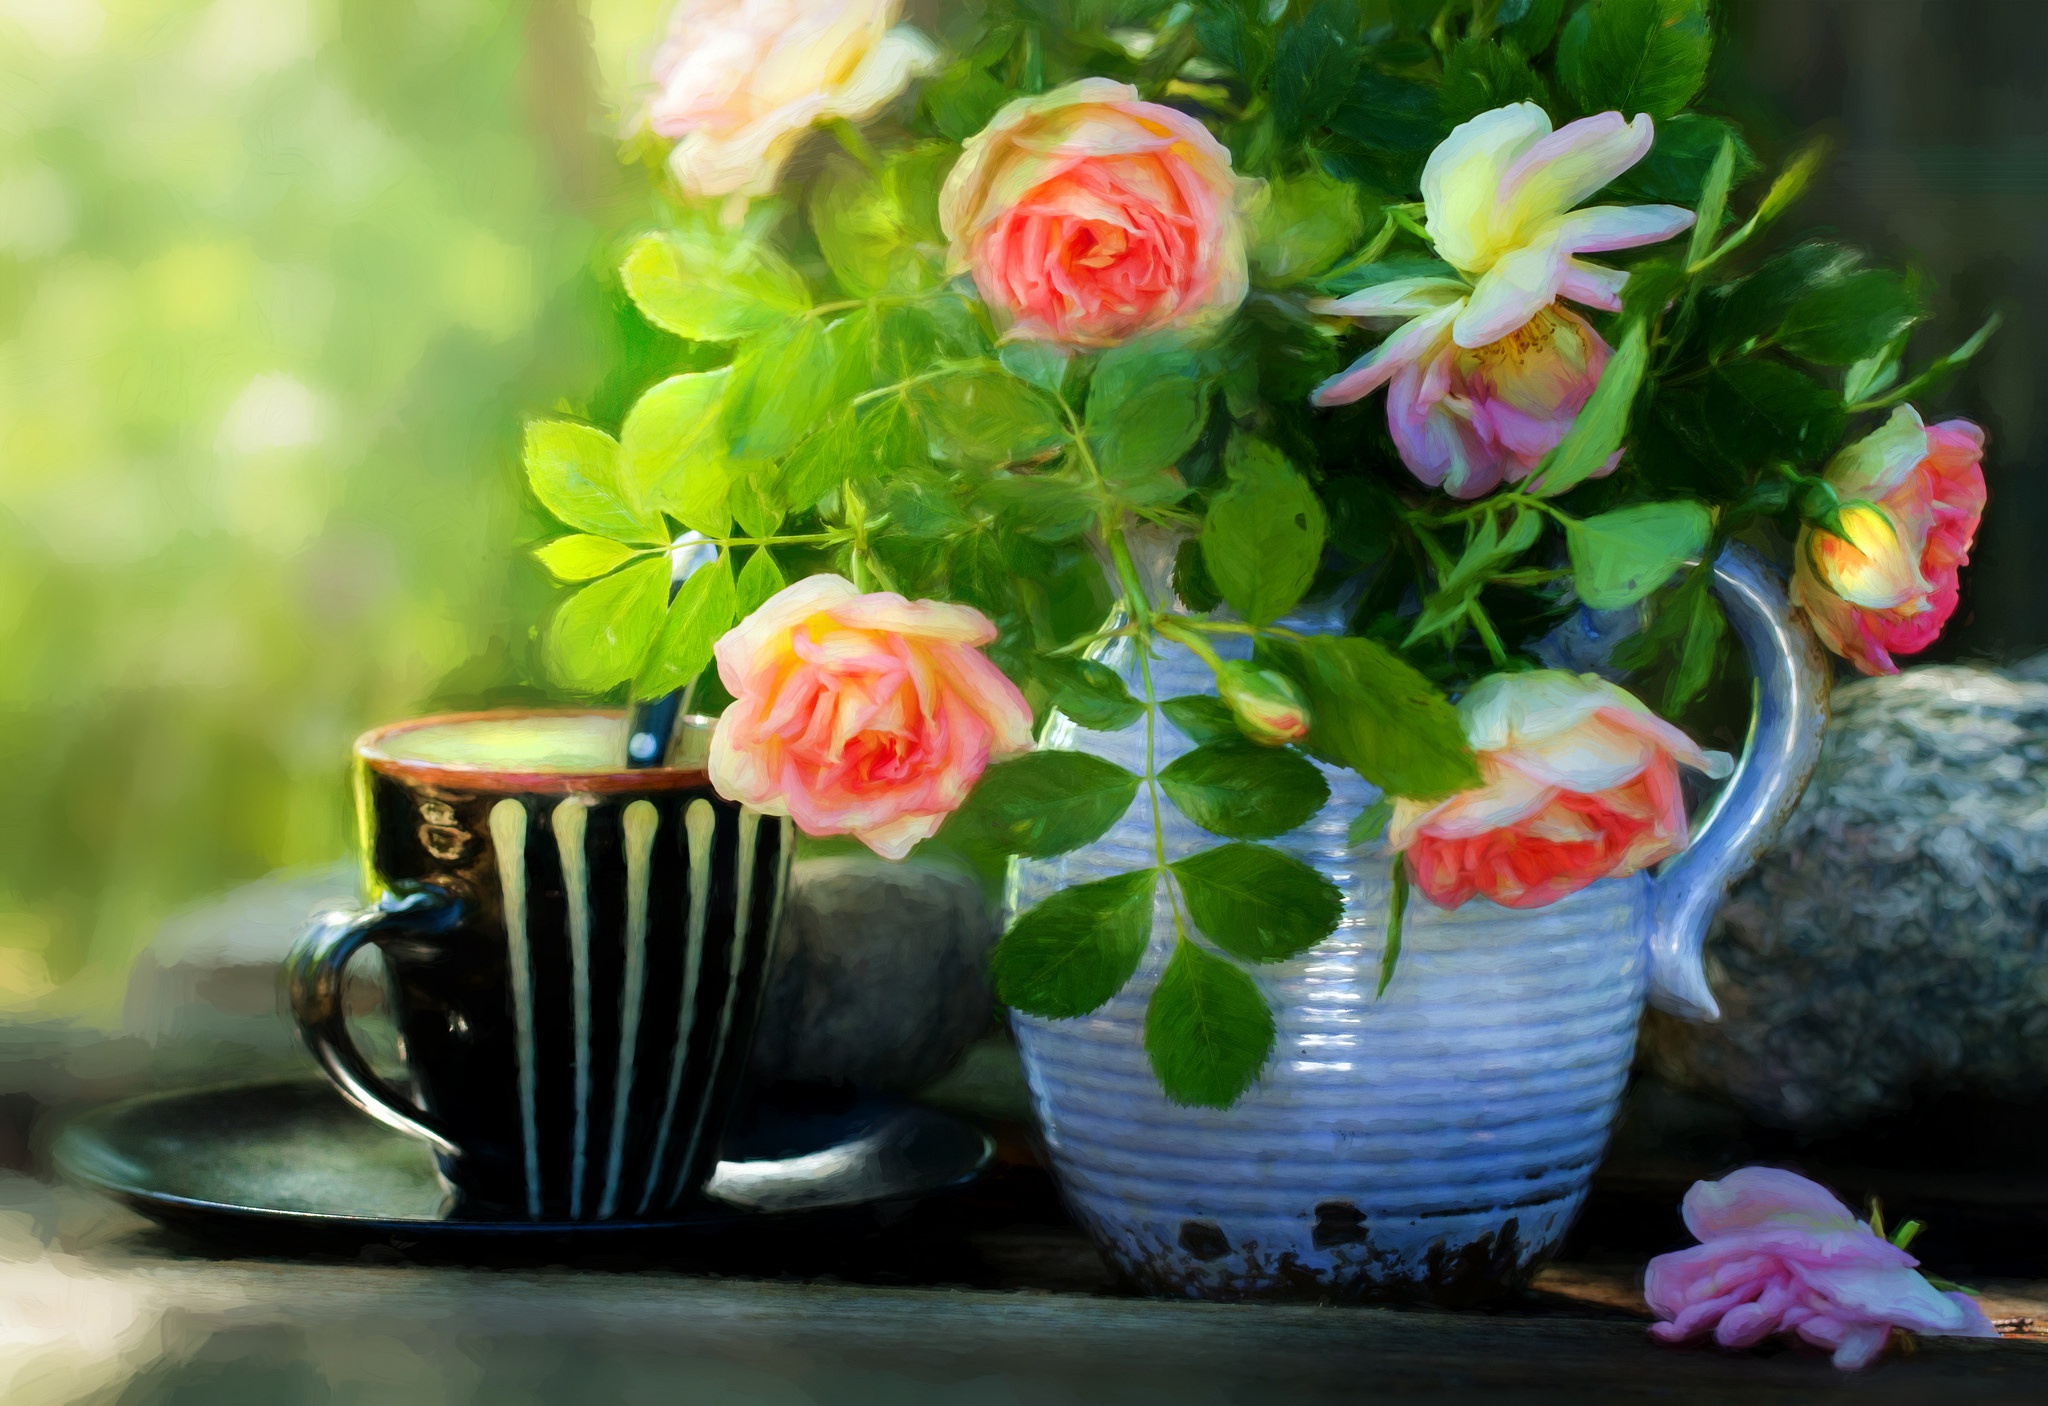 rose, photography, still life, flower, jug, mug